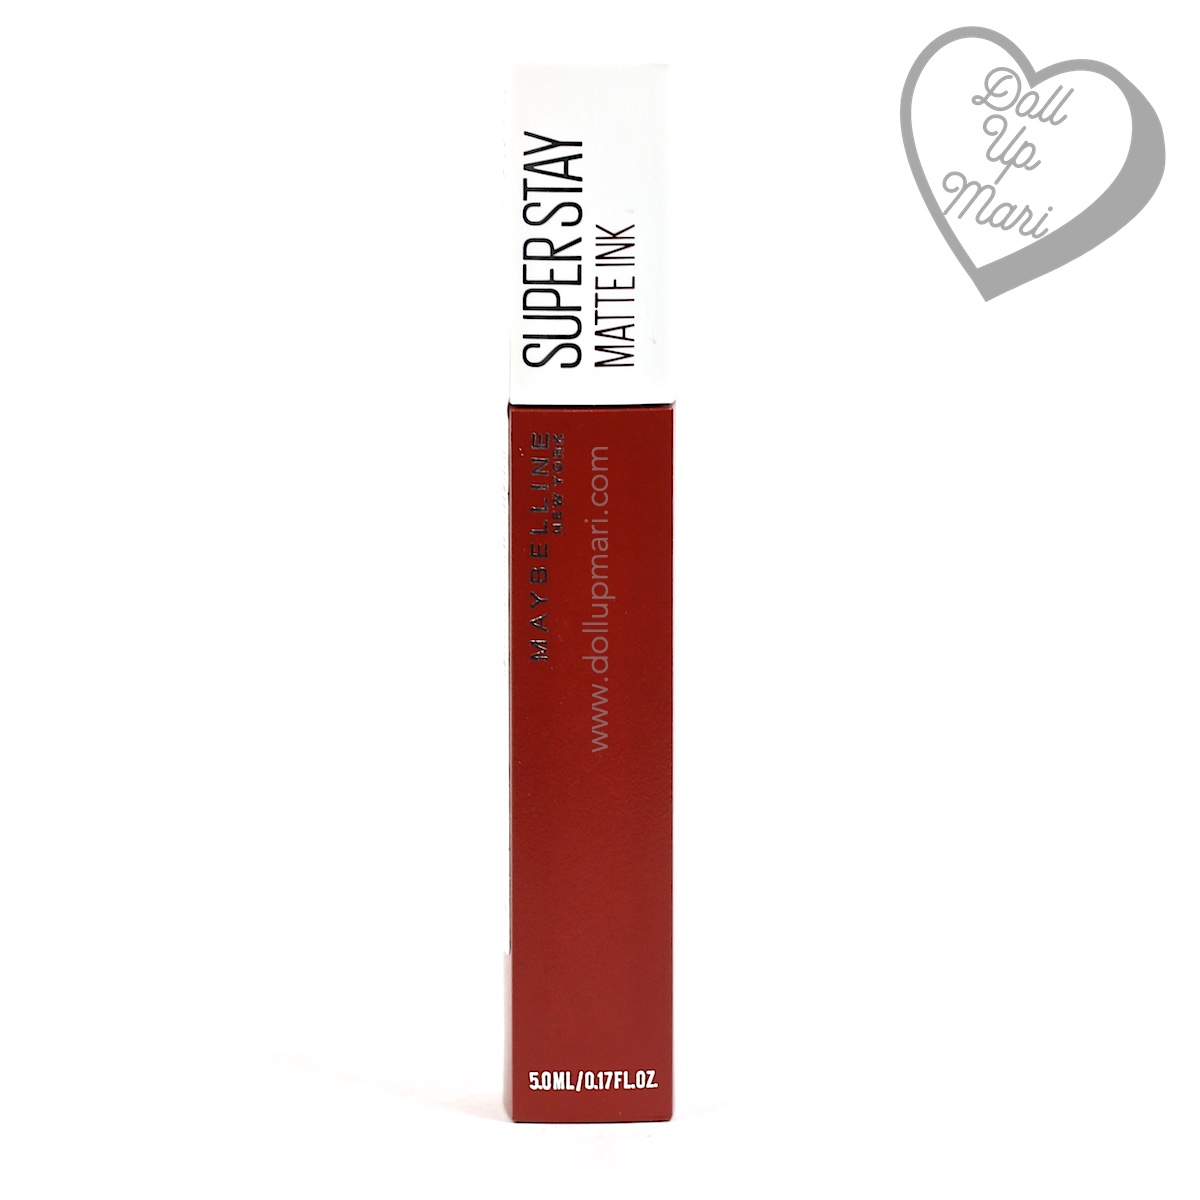 Pack shot of 295 Dauntless shade of Maybelline Superstay Matte Ink Liquid Lipstick Rogue Reds